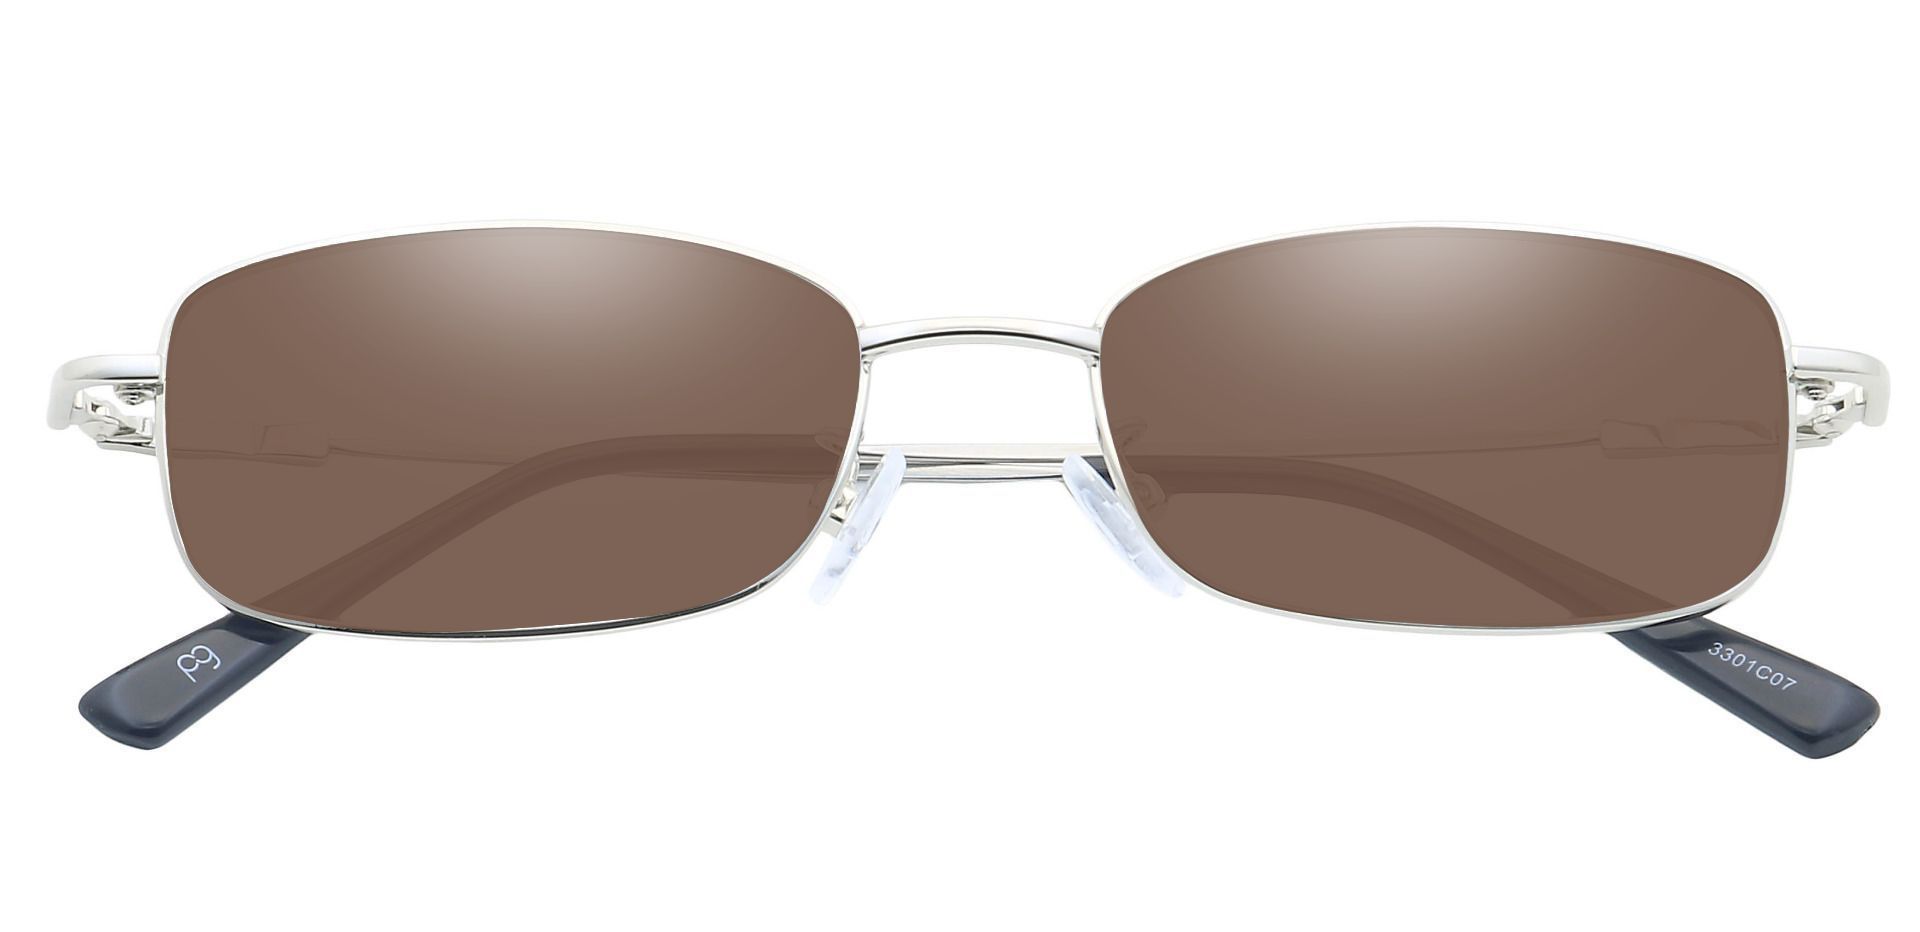 Ross Rectangle Prescription Sunglasses Clear Frame With Brown Lenses Men S Sunglasses